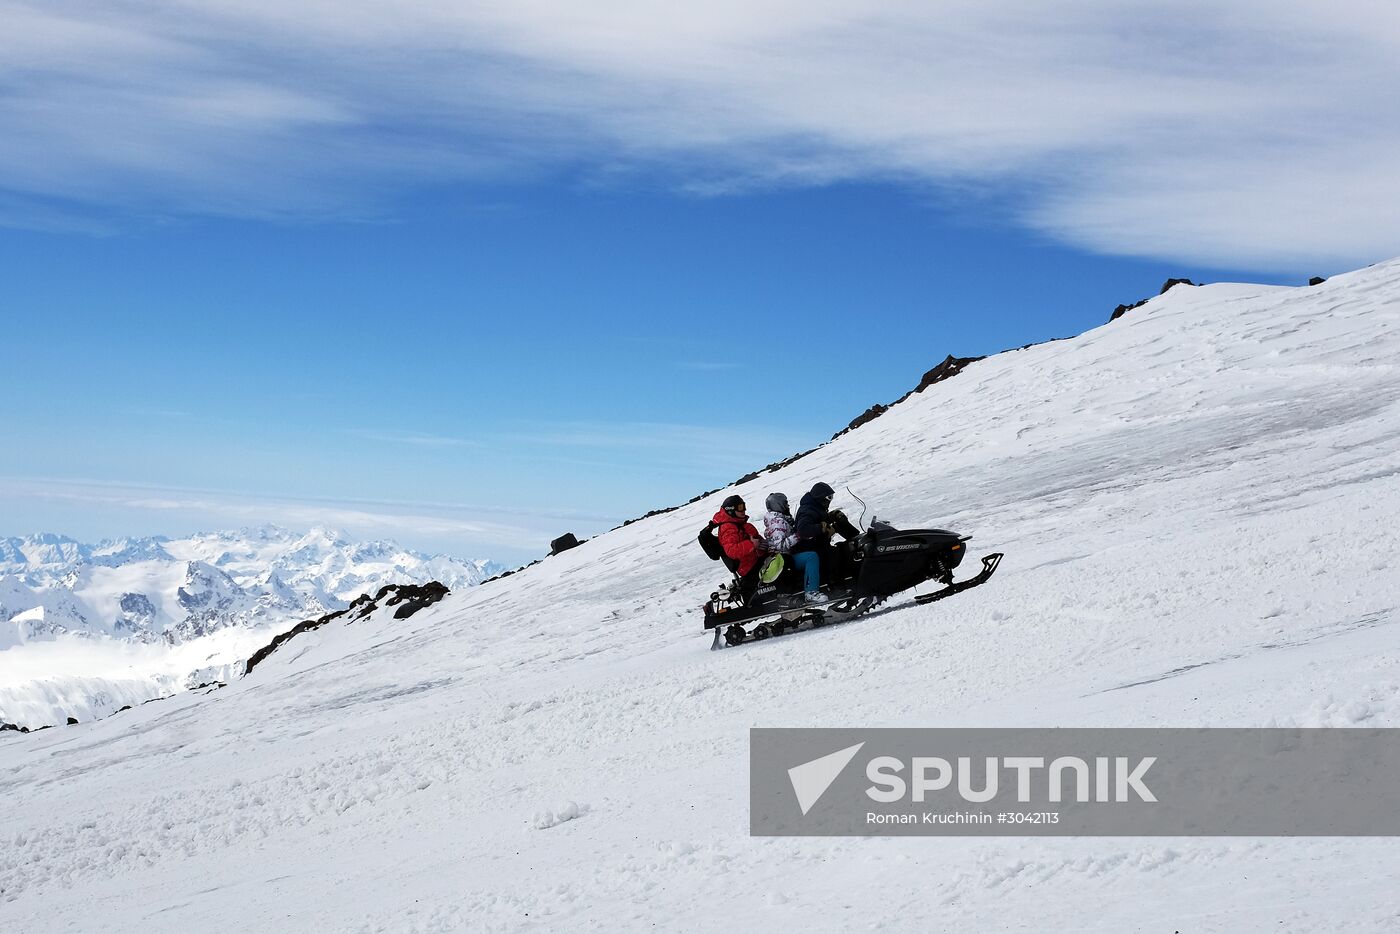 Elbrus all-season tourist-recreation complex in Kabardino-Balkaria